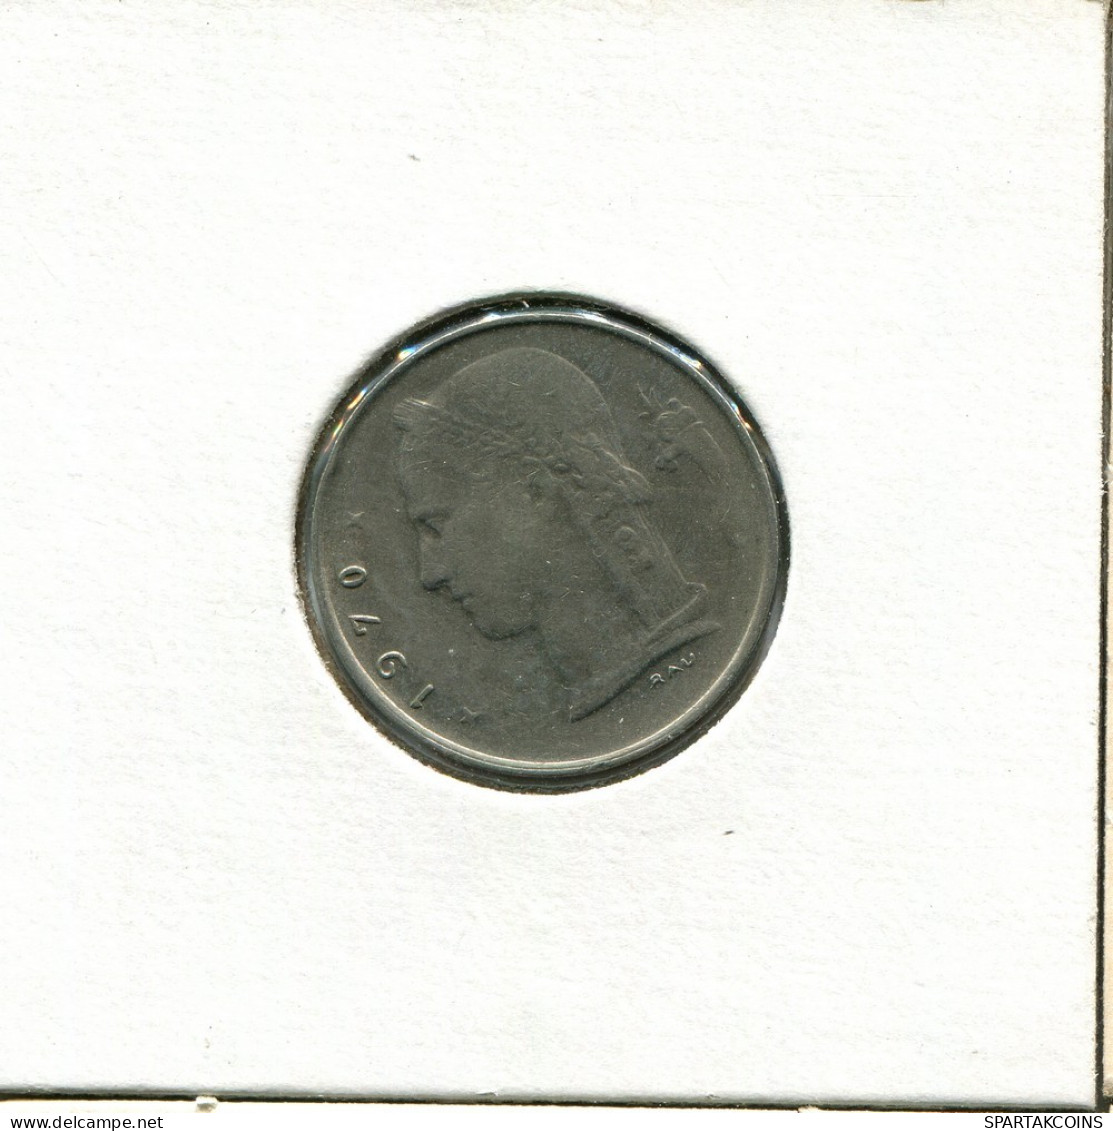 1 FRANC 1970 DUTCH Text BELGIEN BELGIUM Münze #AU009.D.A - 1 Franc